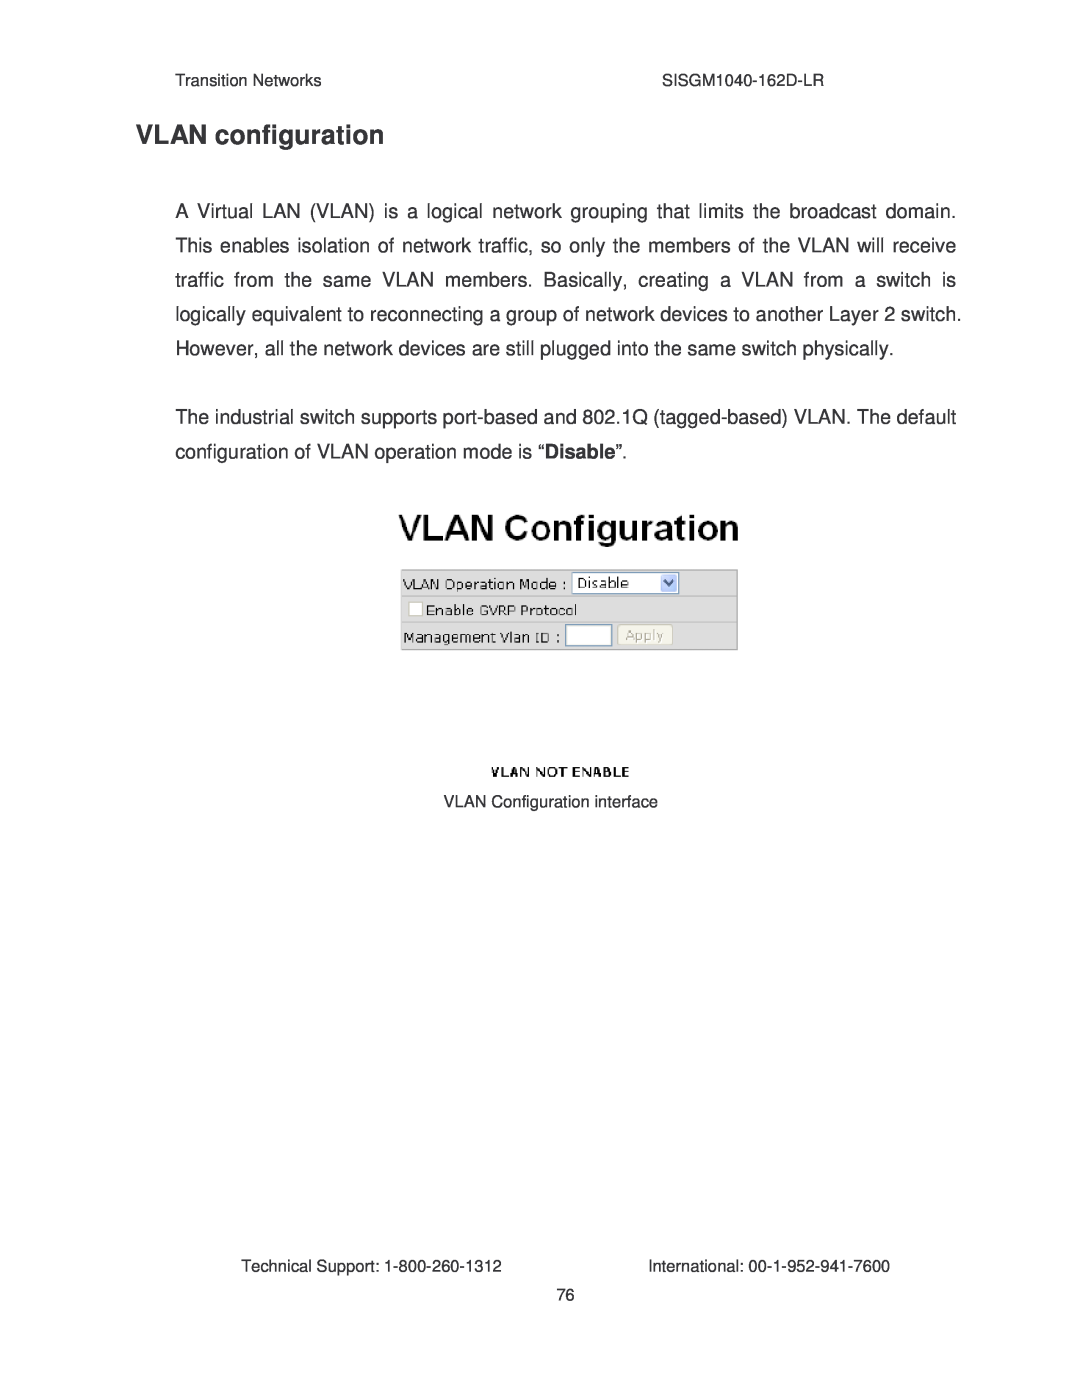 Transition Networks SISGM1040-162D manual VLAN configuration 